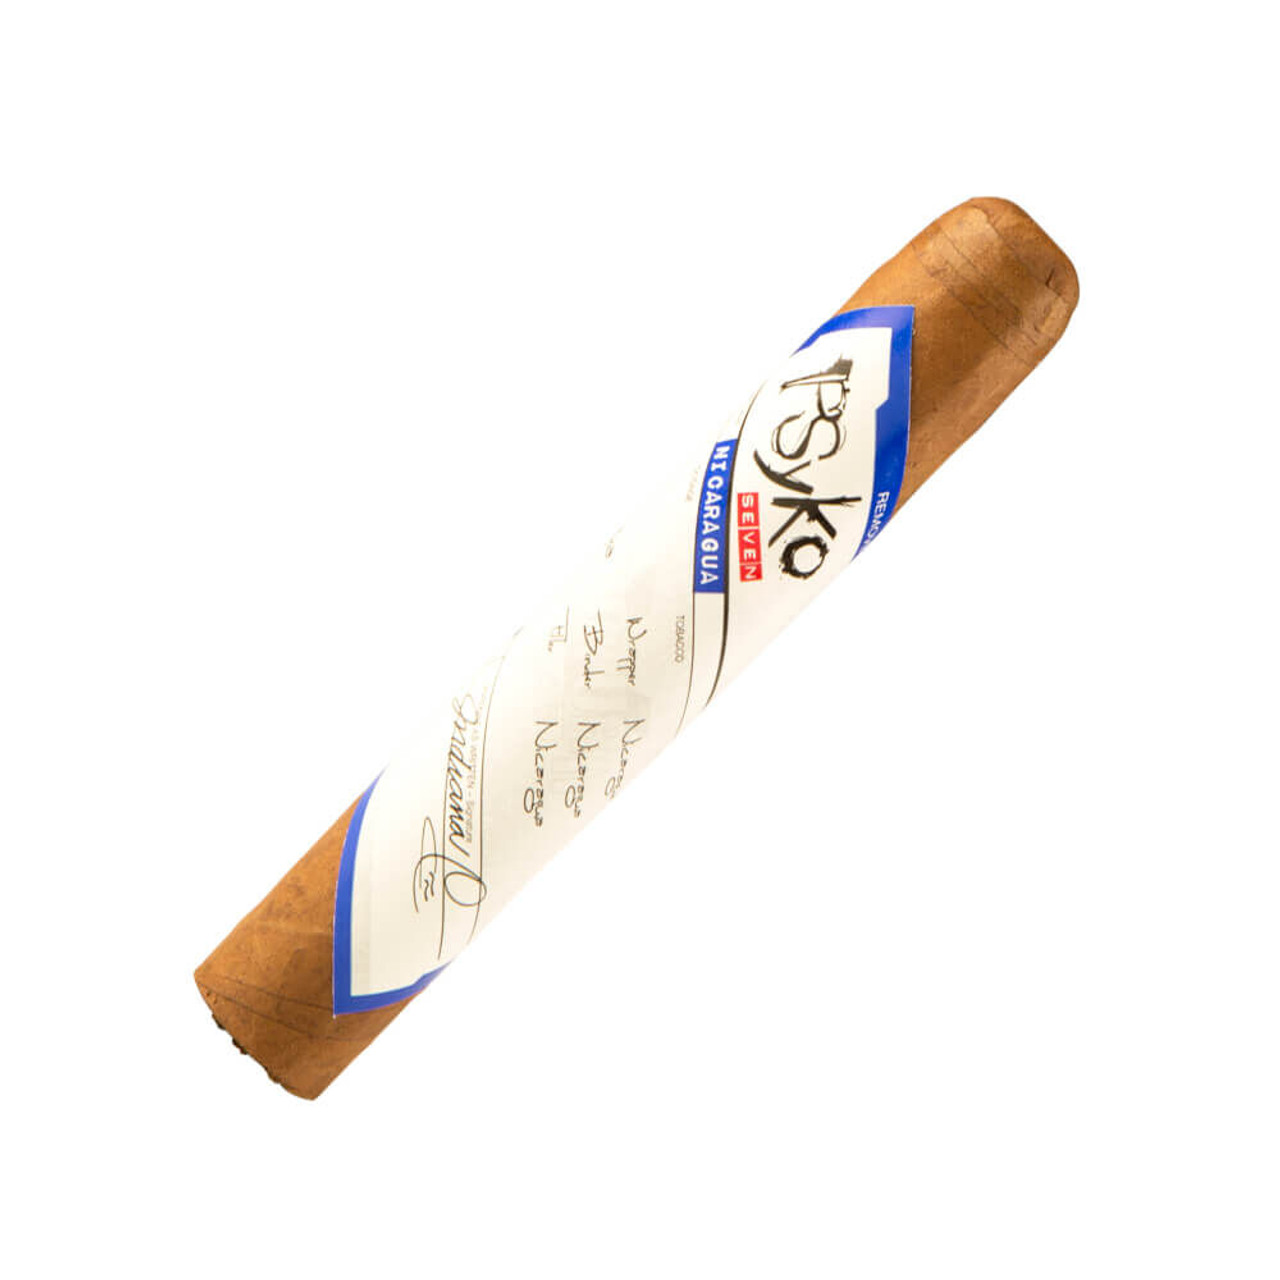 Psyko Seven Nicaragua Robusto Cigars - 5 x 50 (Box of 20)